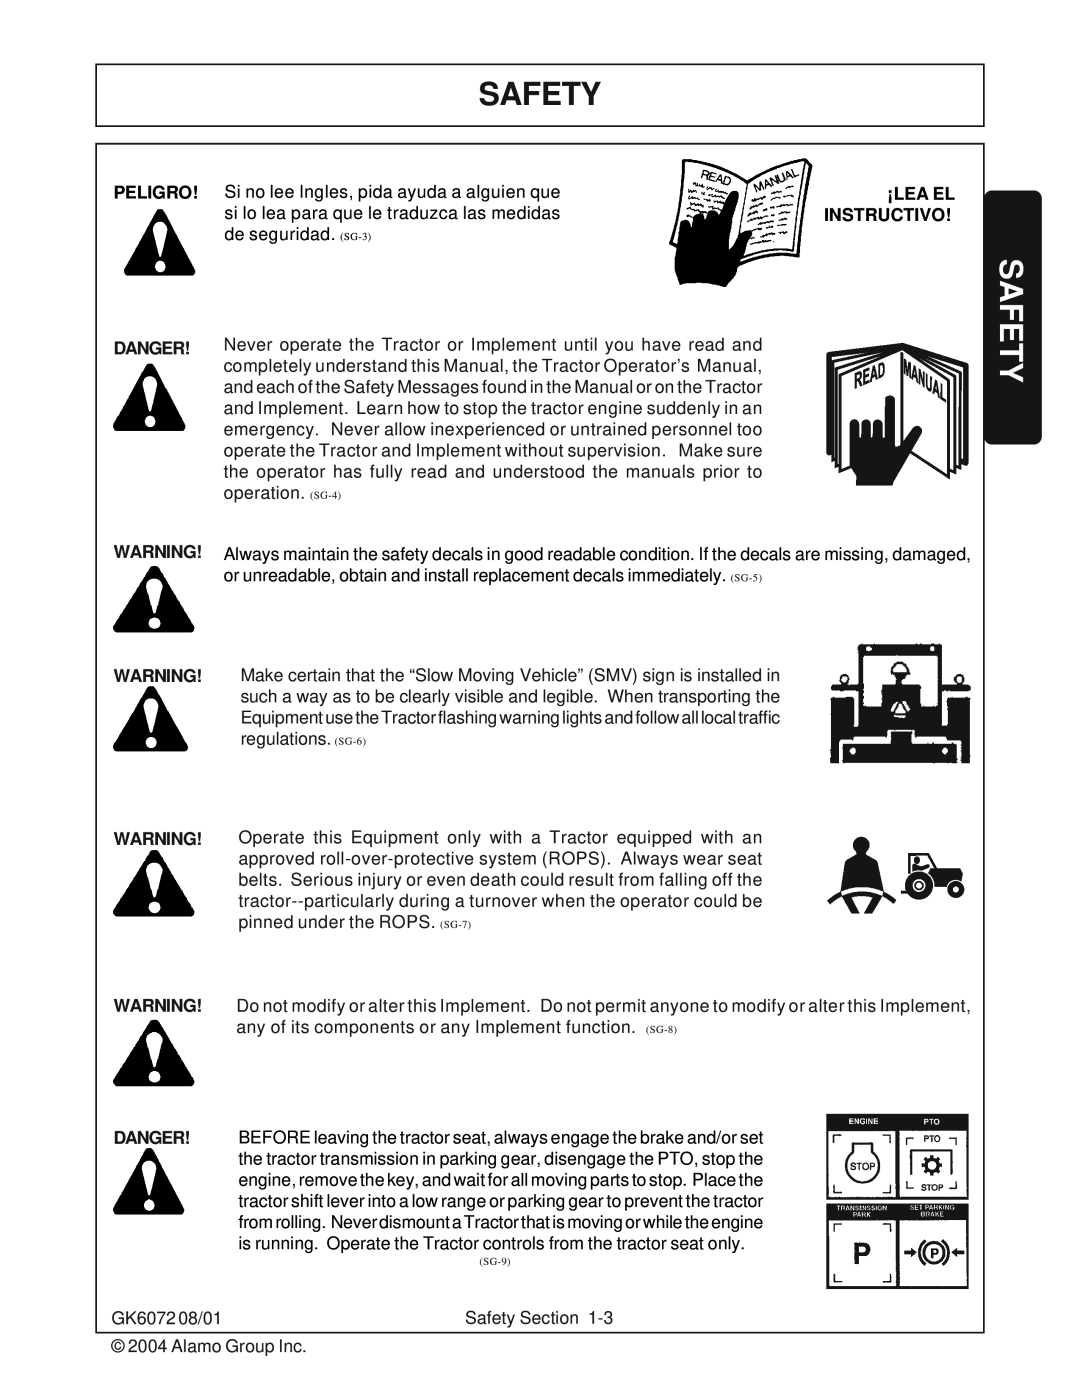 Rhino Mounts GK6072 manual Safety, Peligro Danger, ¡Lea El Instructivo 